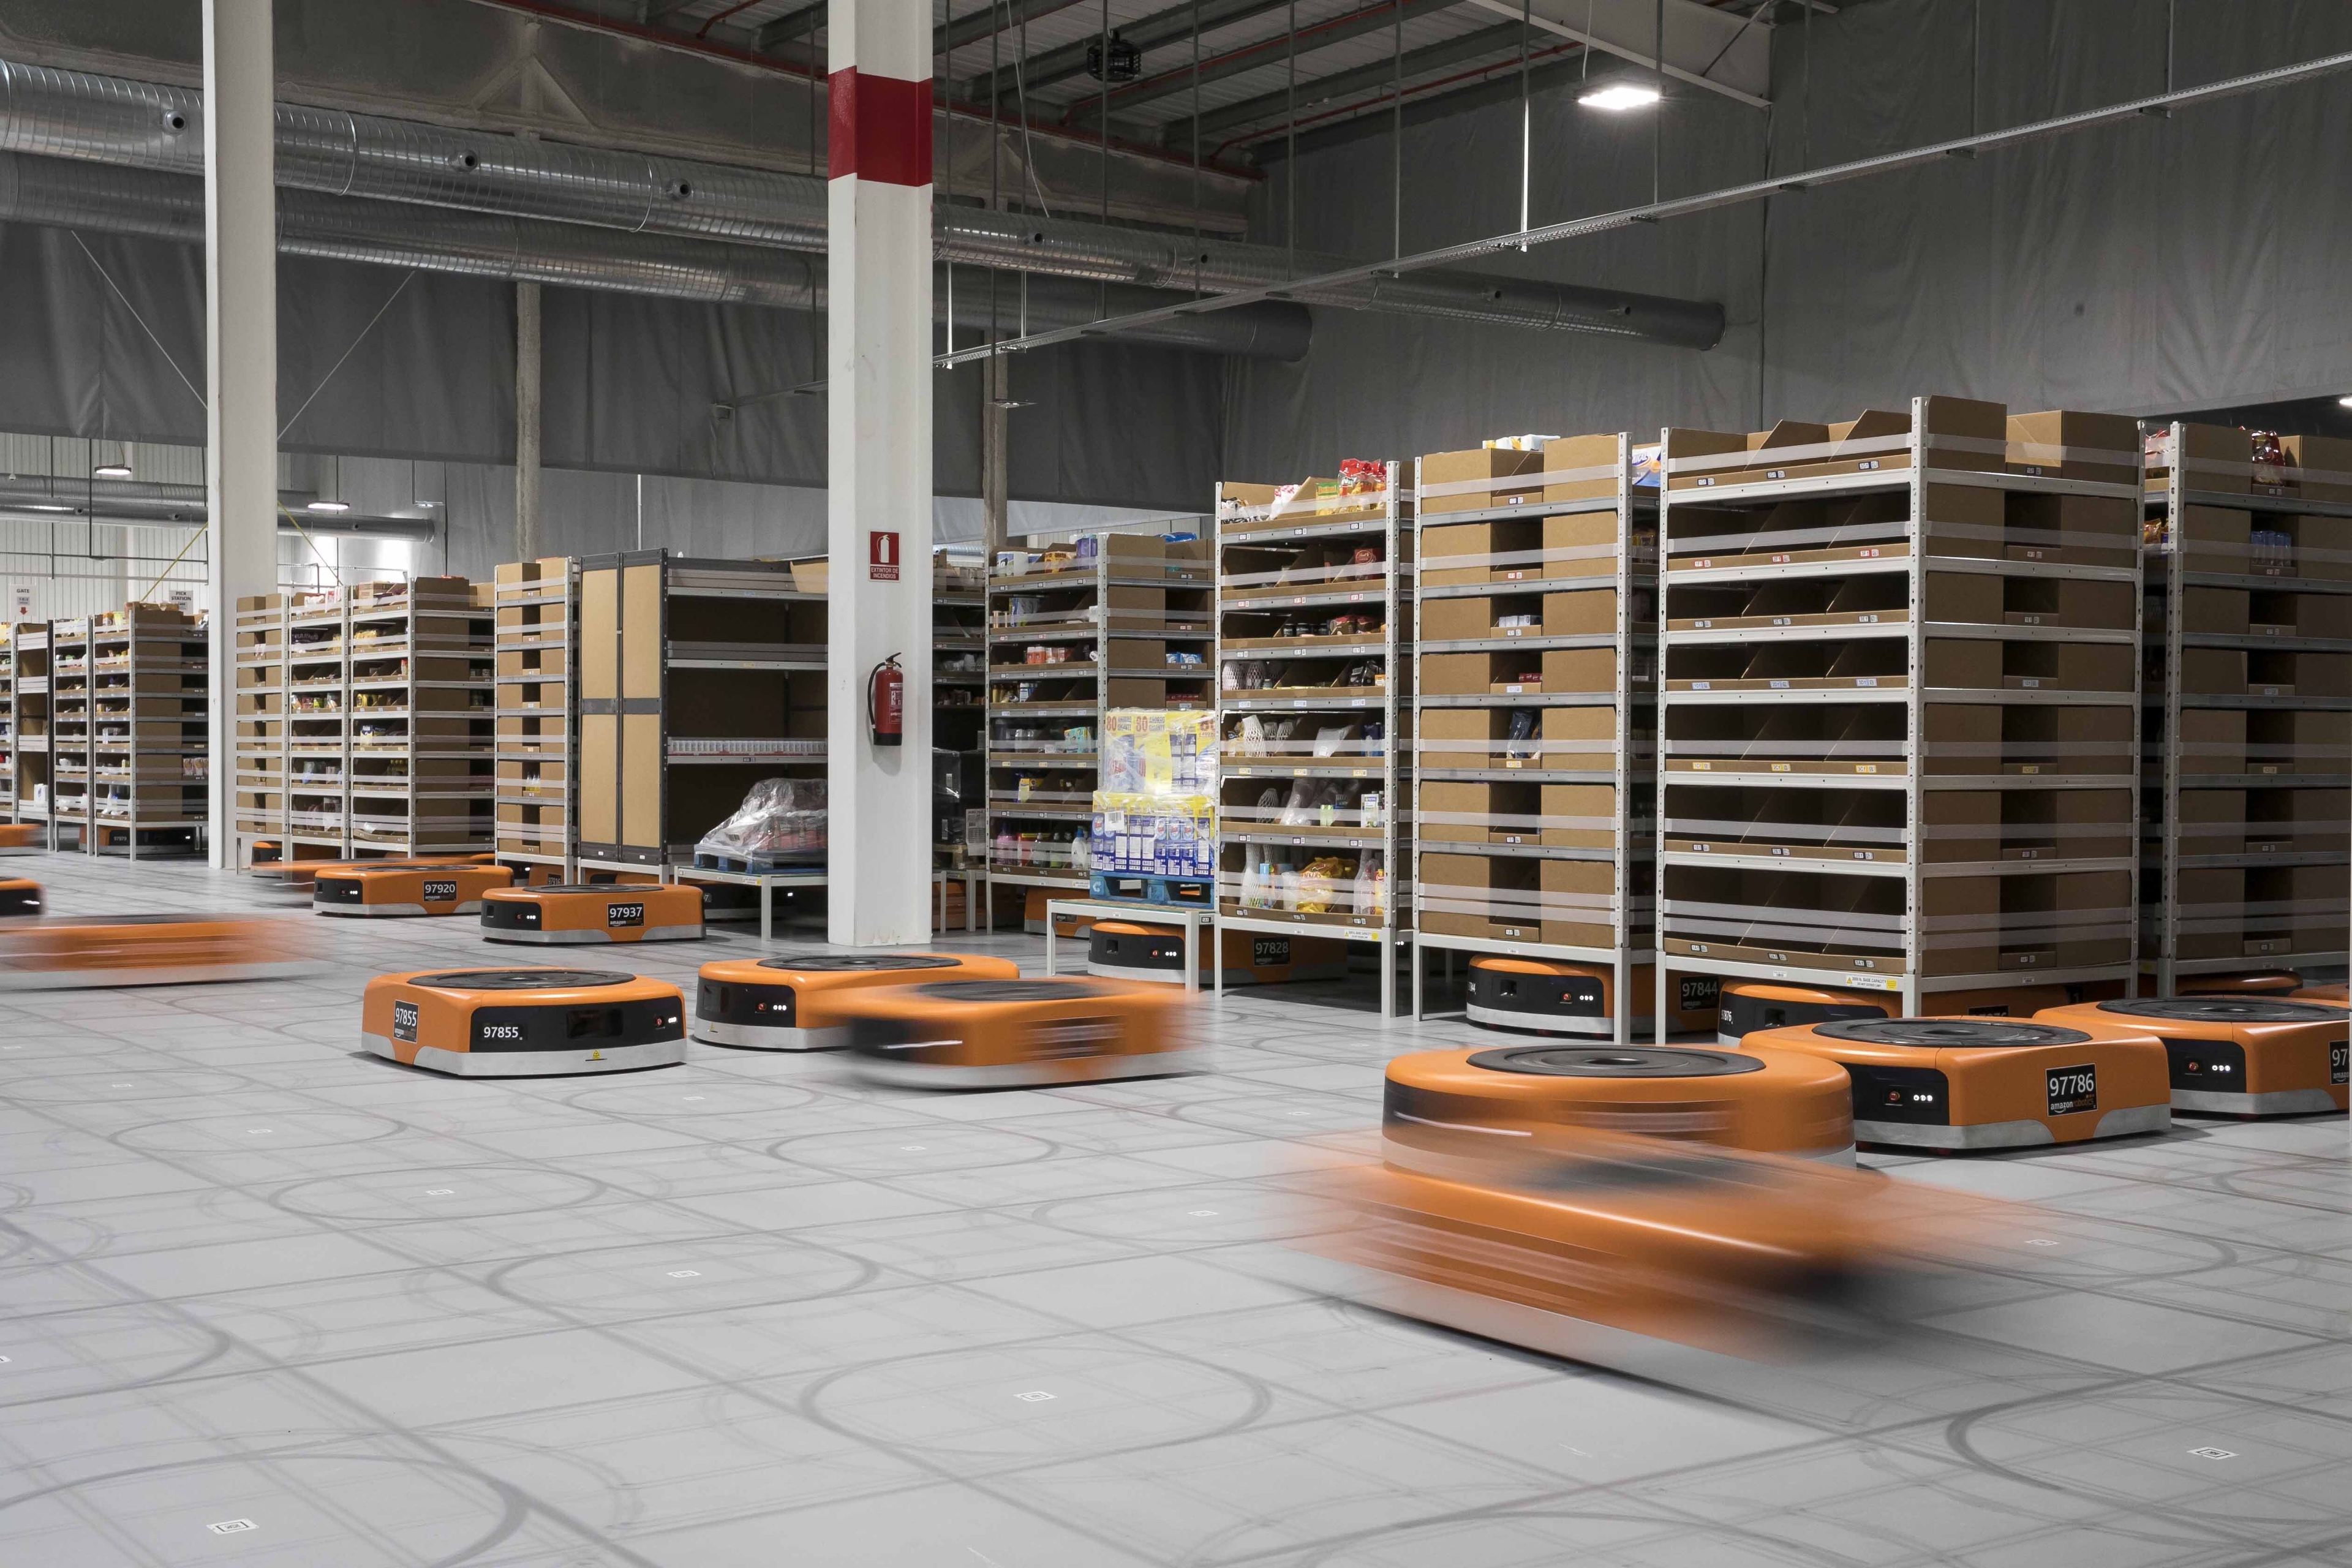 Amazon robotics at work in a Fulfillment Center 